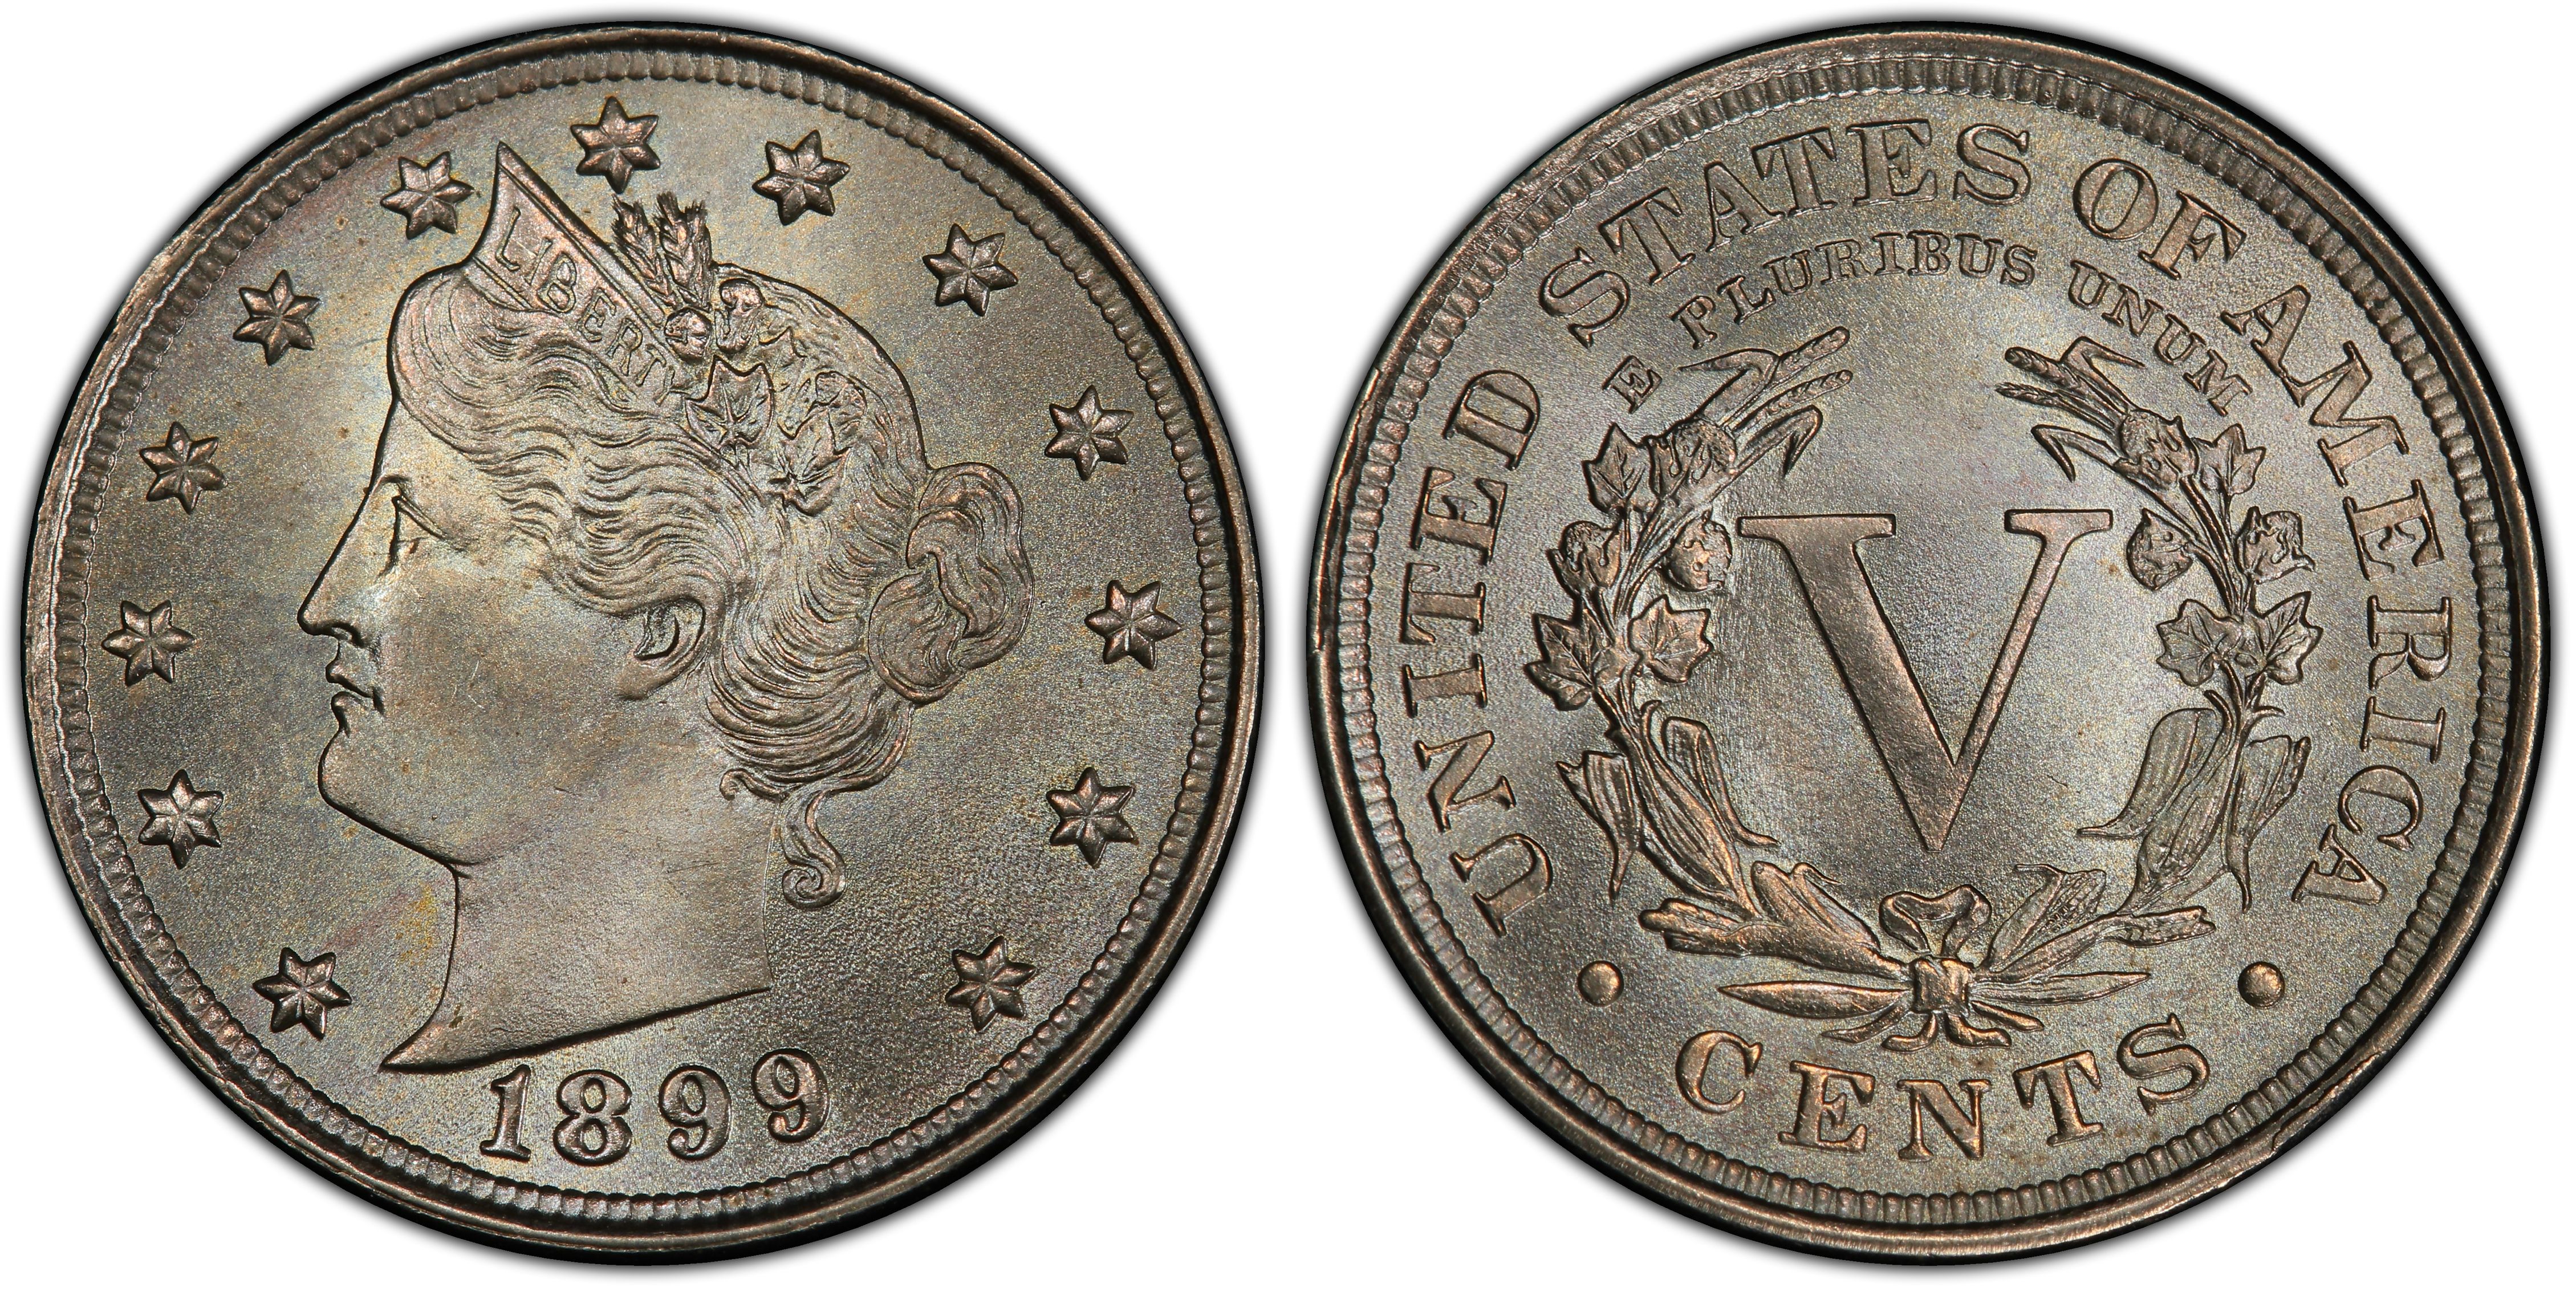 1899 Liberty Nickel F Uncertified